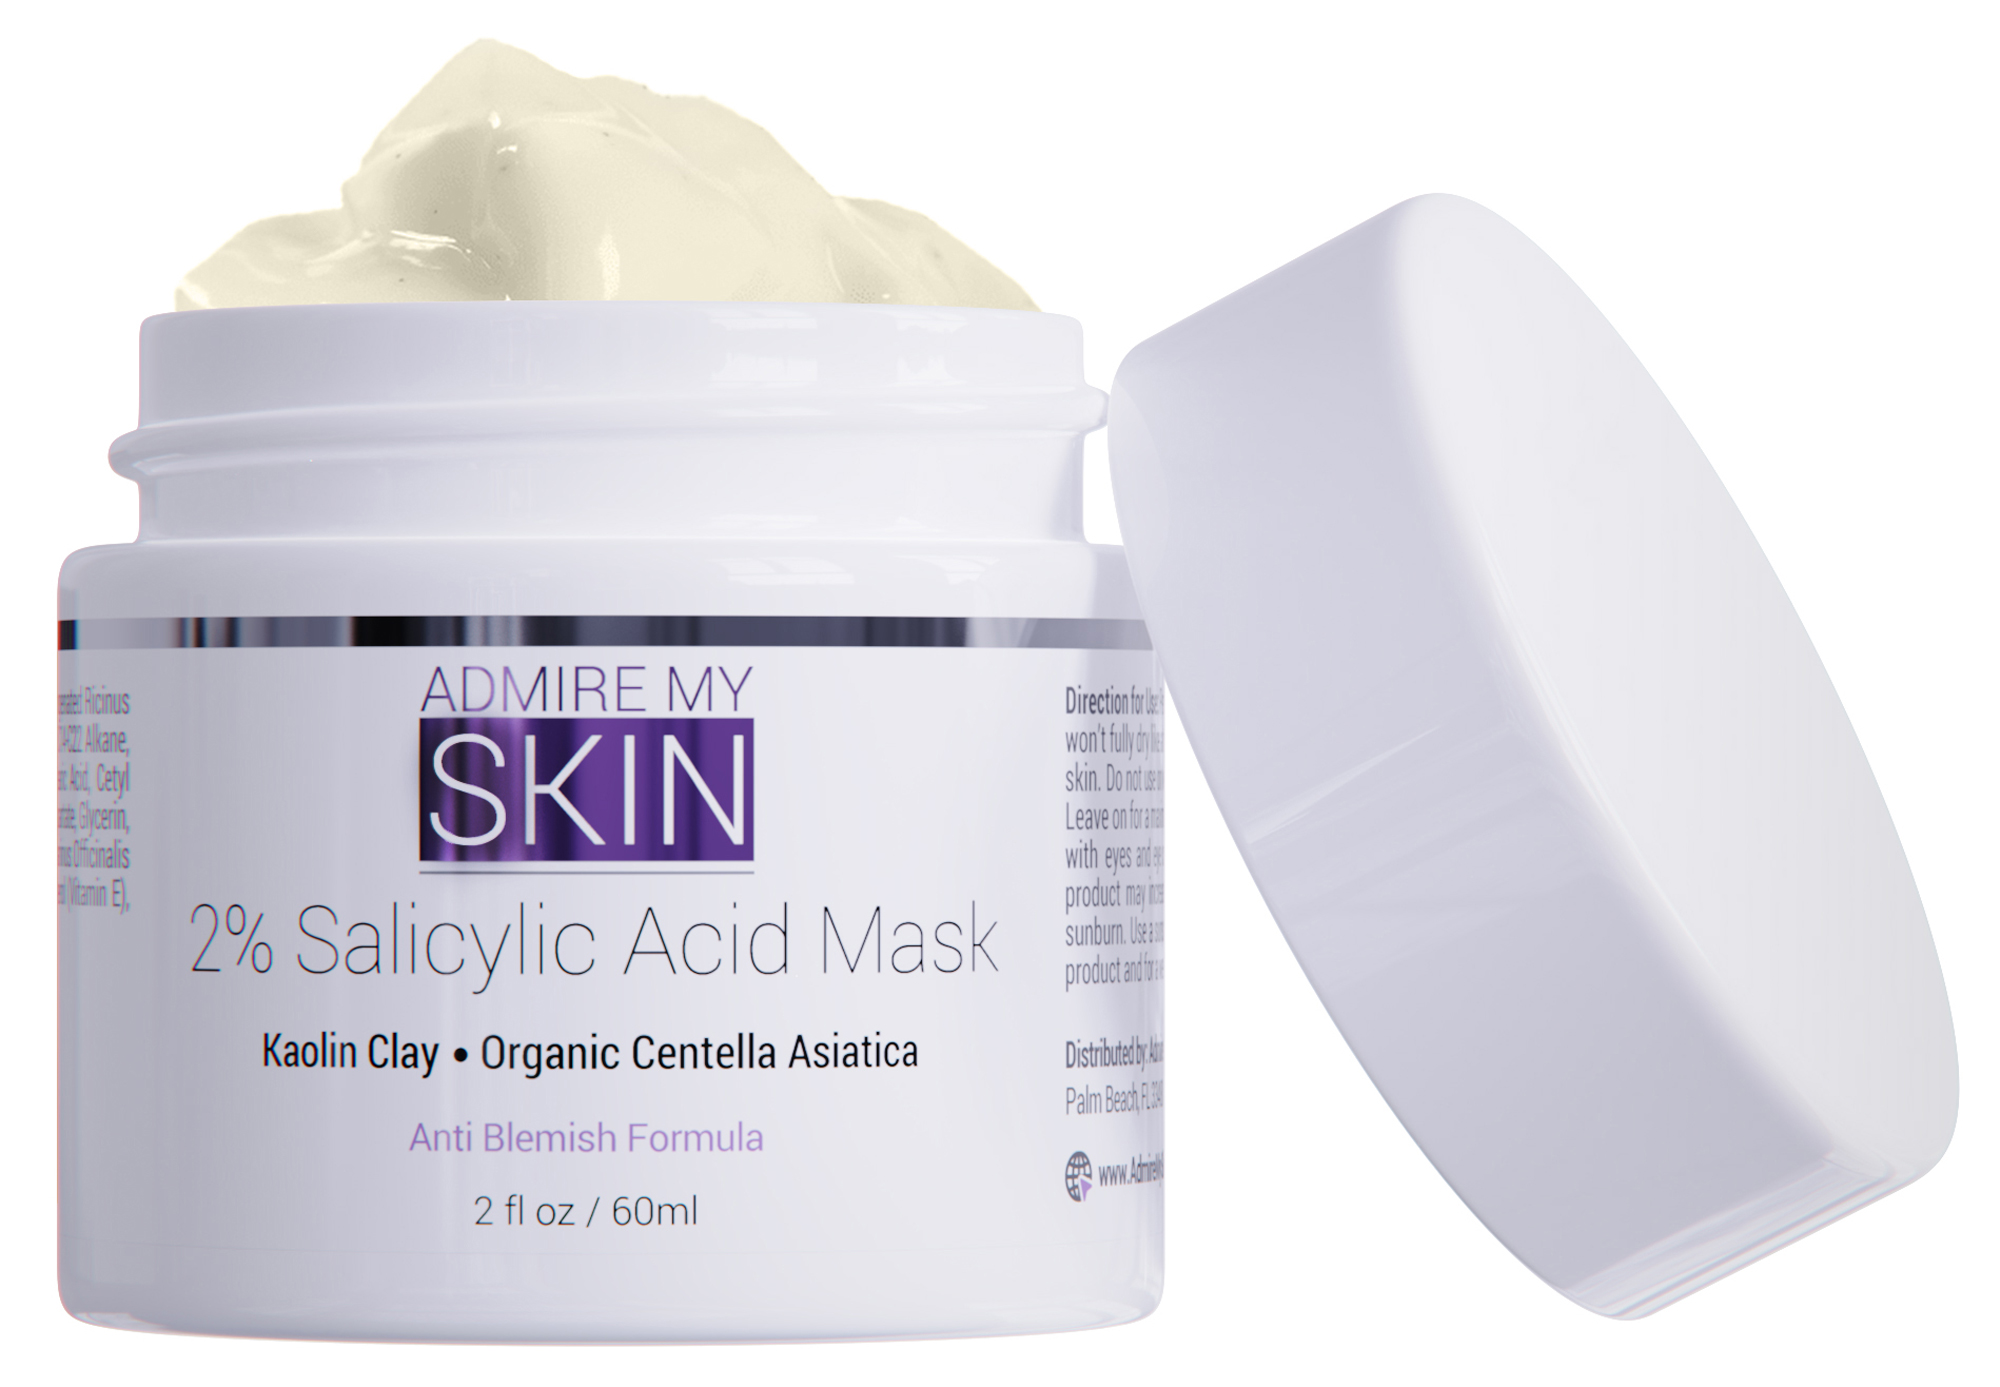 2% Salicylic Acid Mask x 50